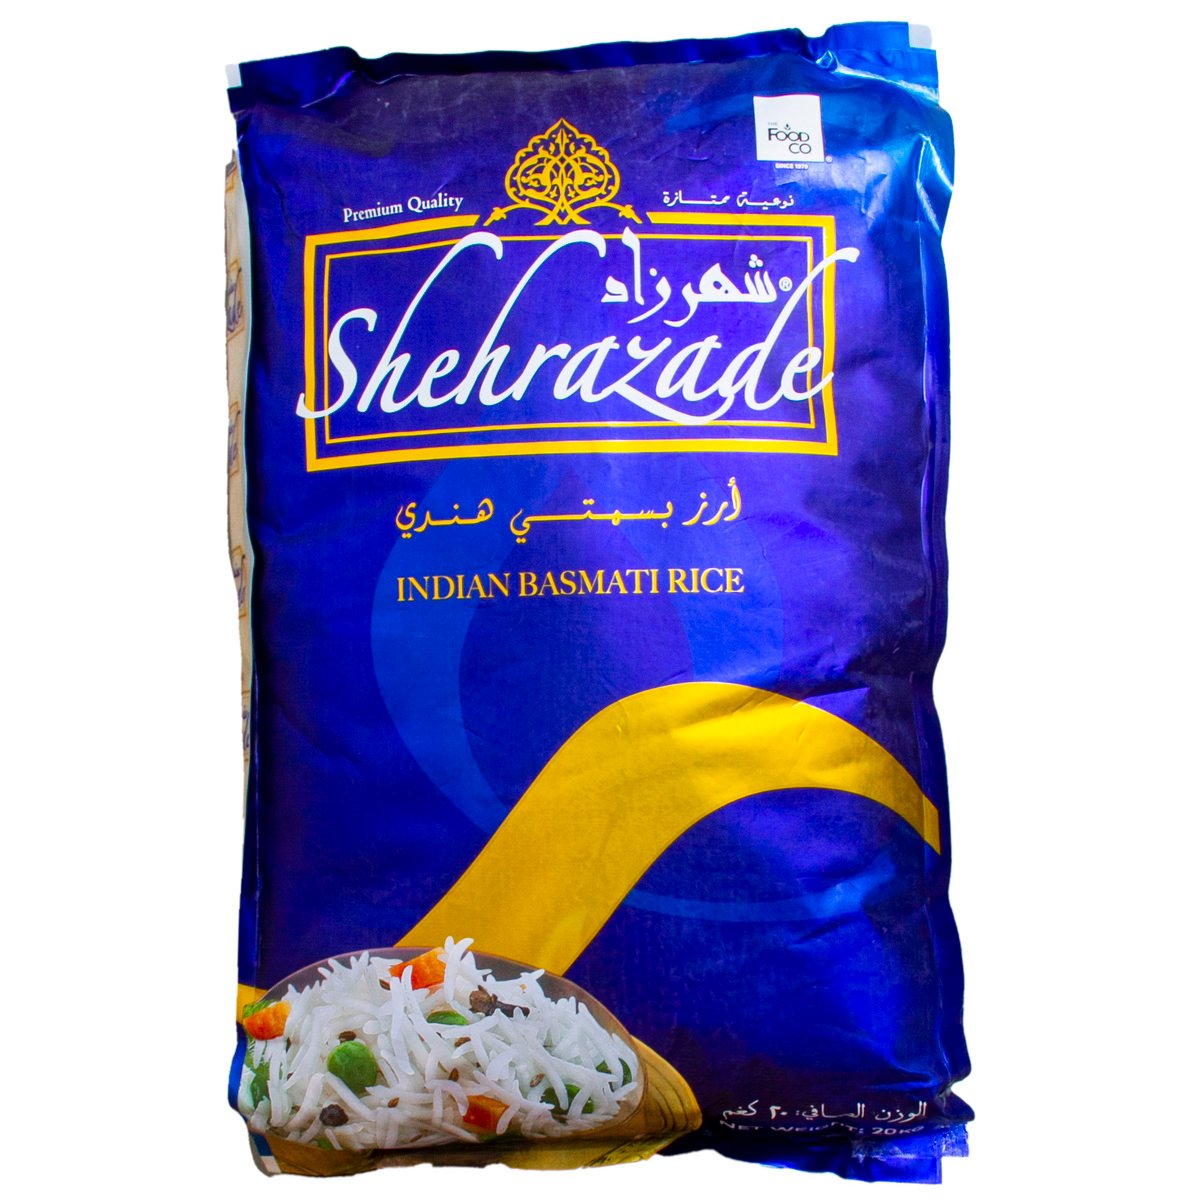 Shehrazade Indian Basmati Rice 20 kg